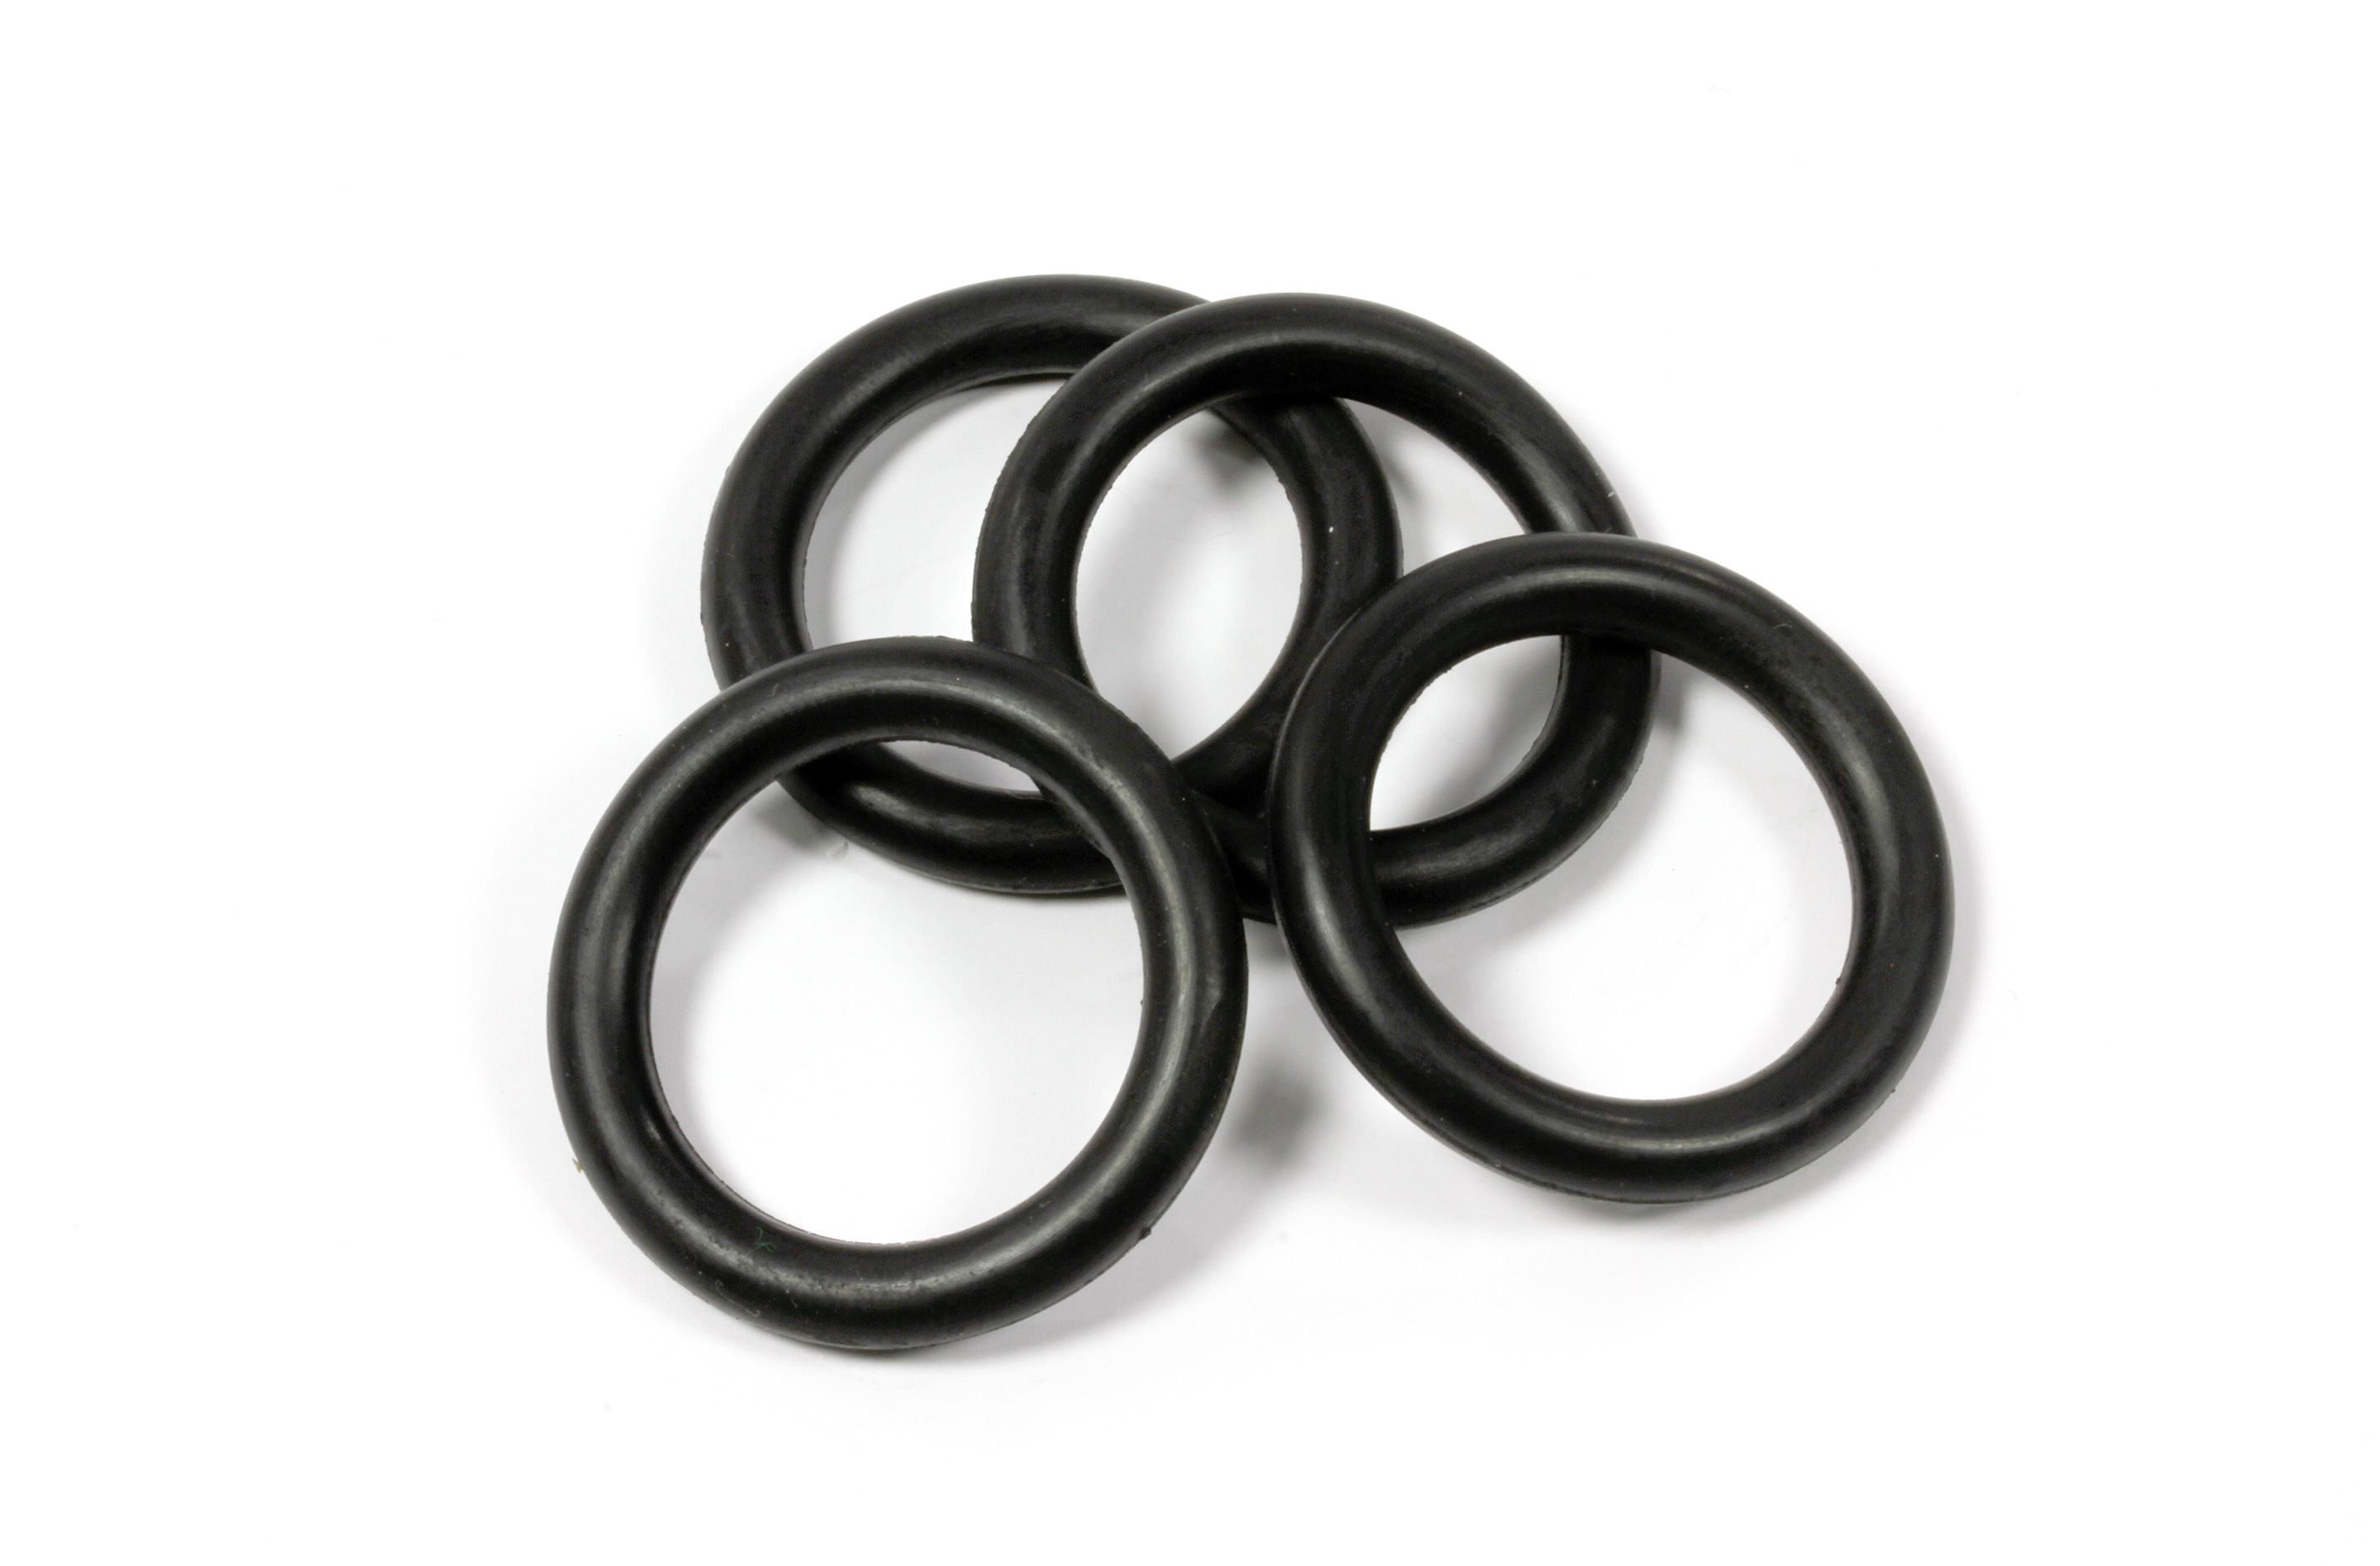 AREA-XL 008/01 Spare O-rings